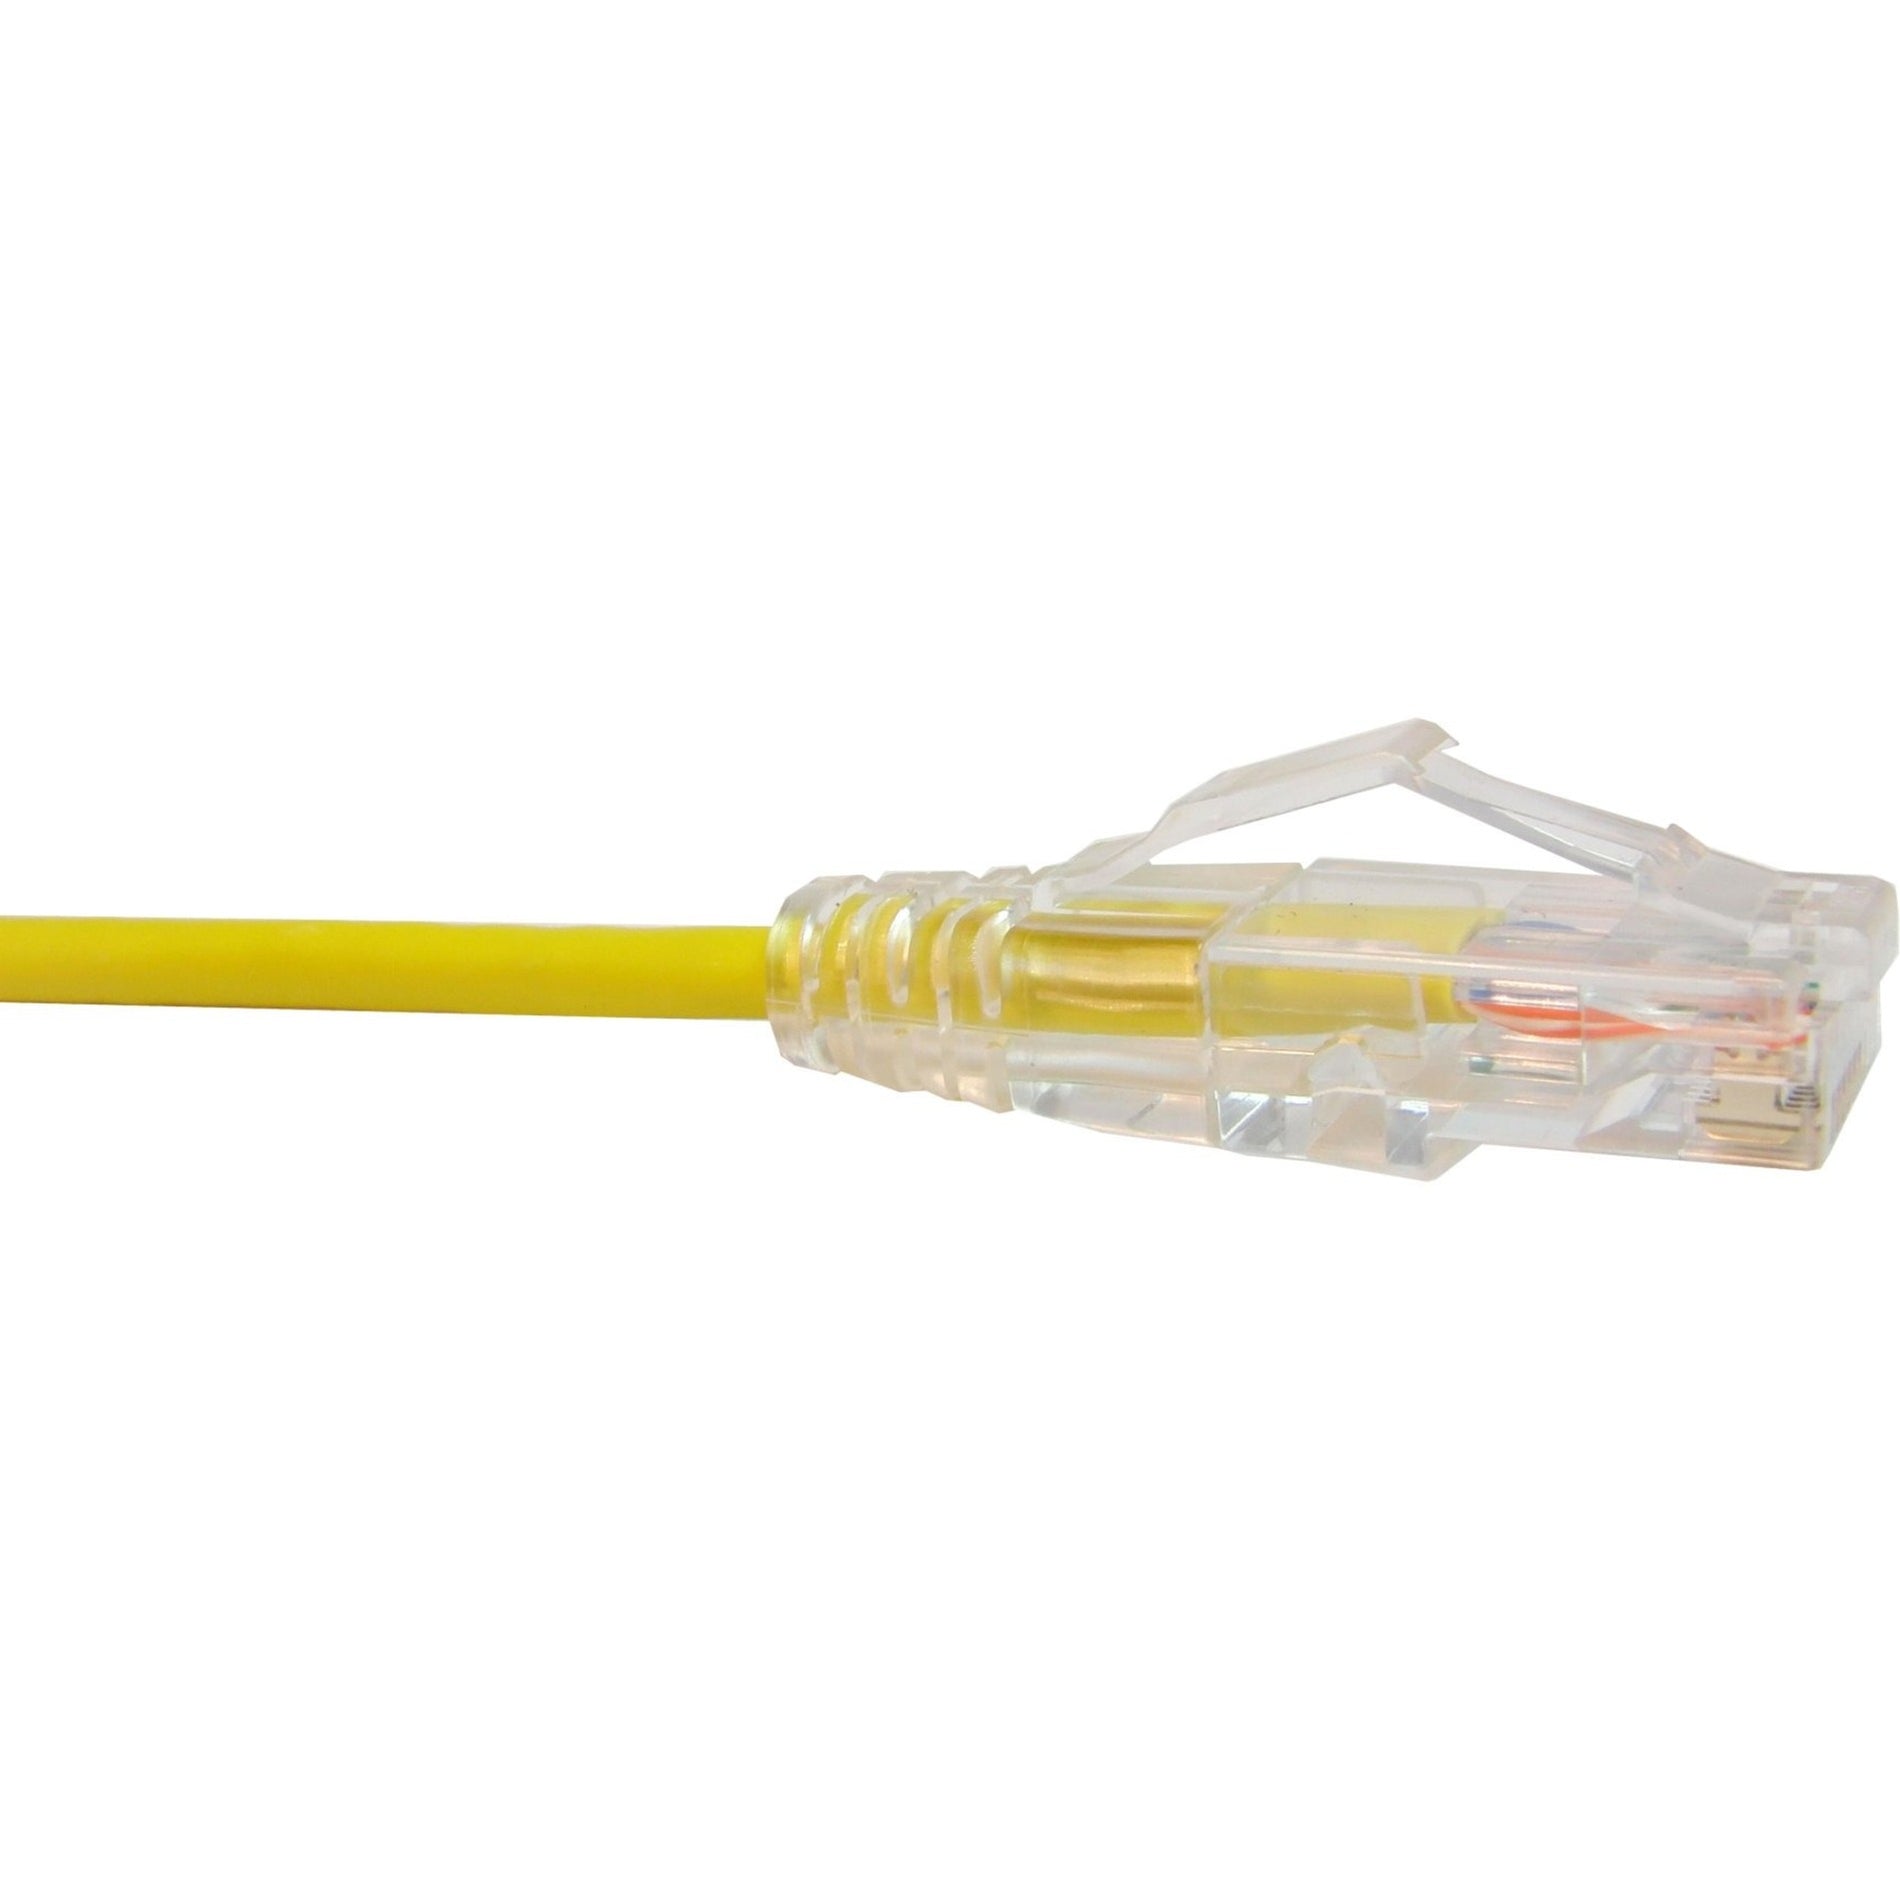 Unirise CS6-05F-YLW Clearfit Slim Cat6 Patch Cable，无卡口，黄色，5英尺。品牌名称翻译：优尼赛